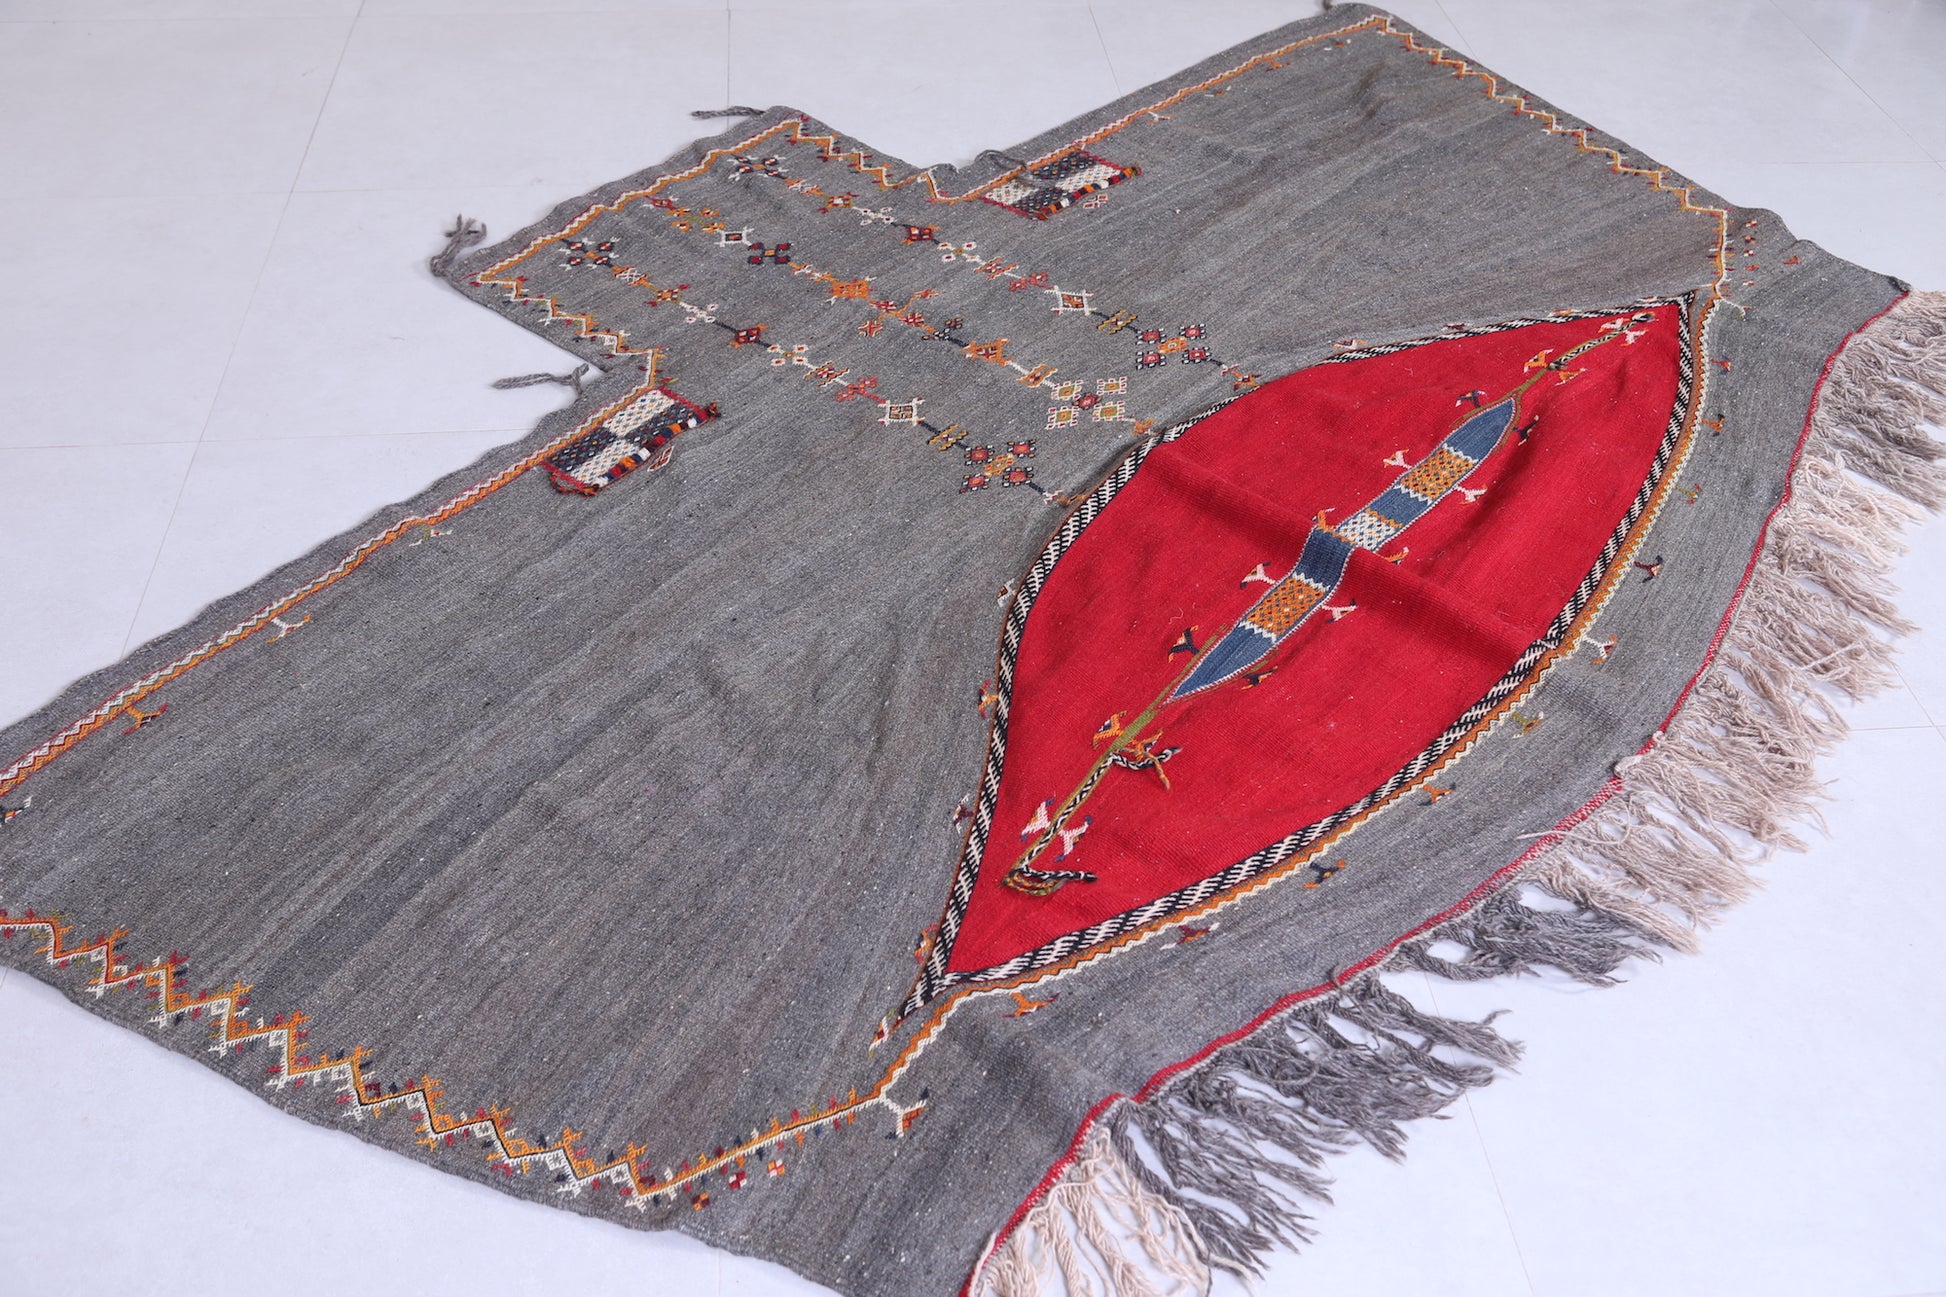 Berber vintage cape, handmade moroccan cape